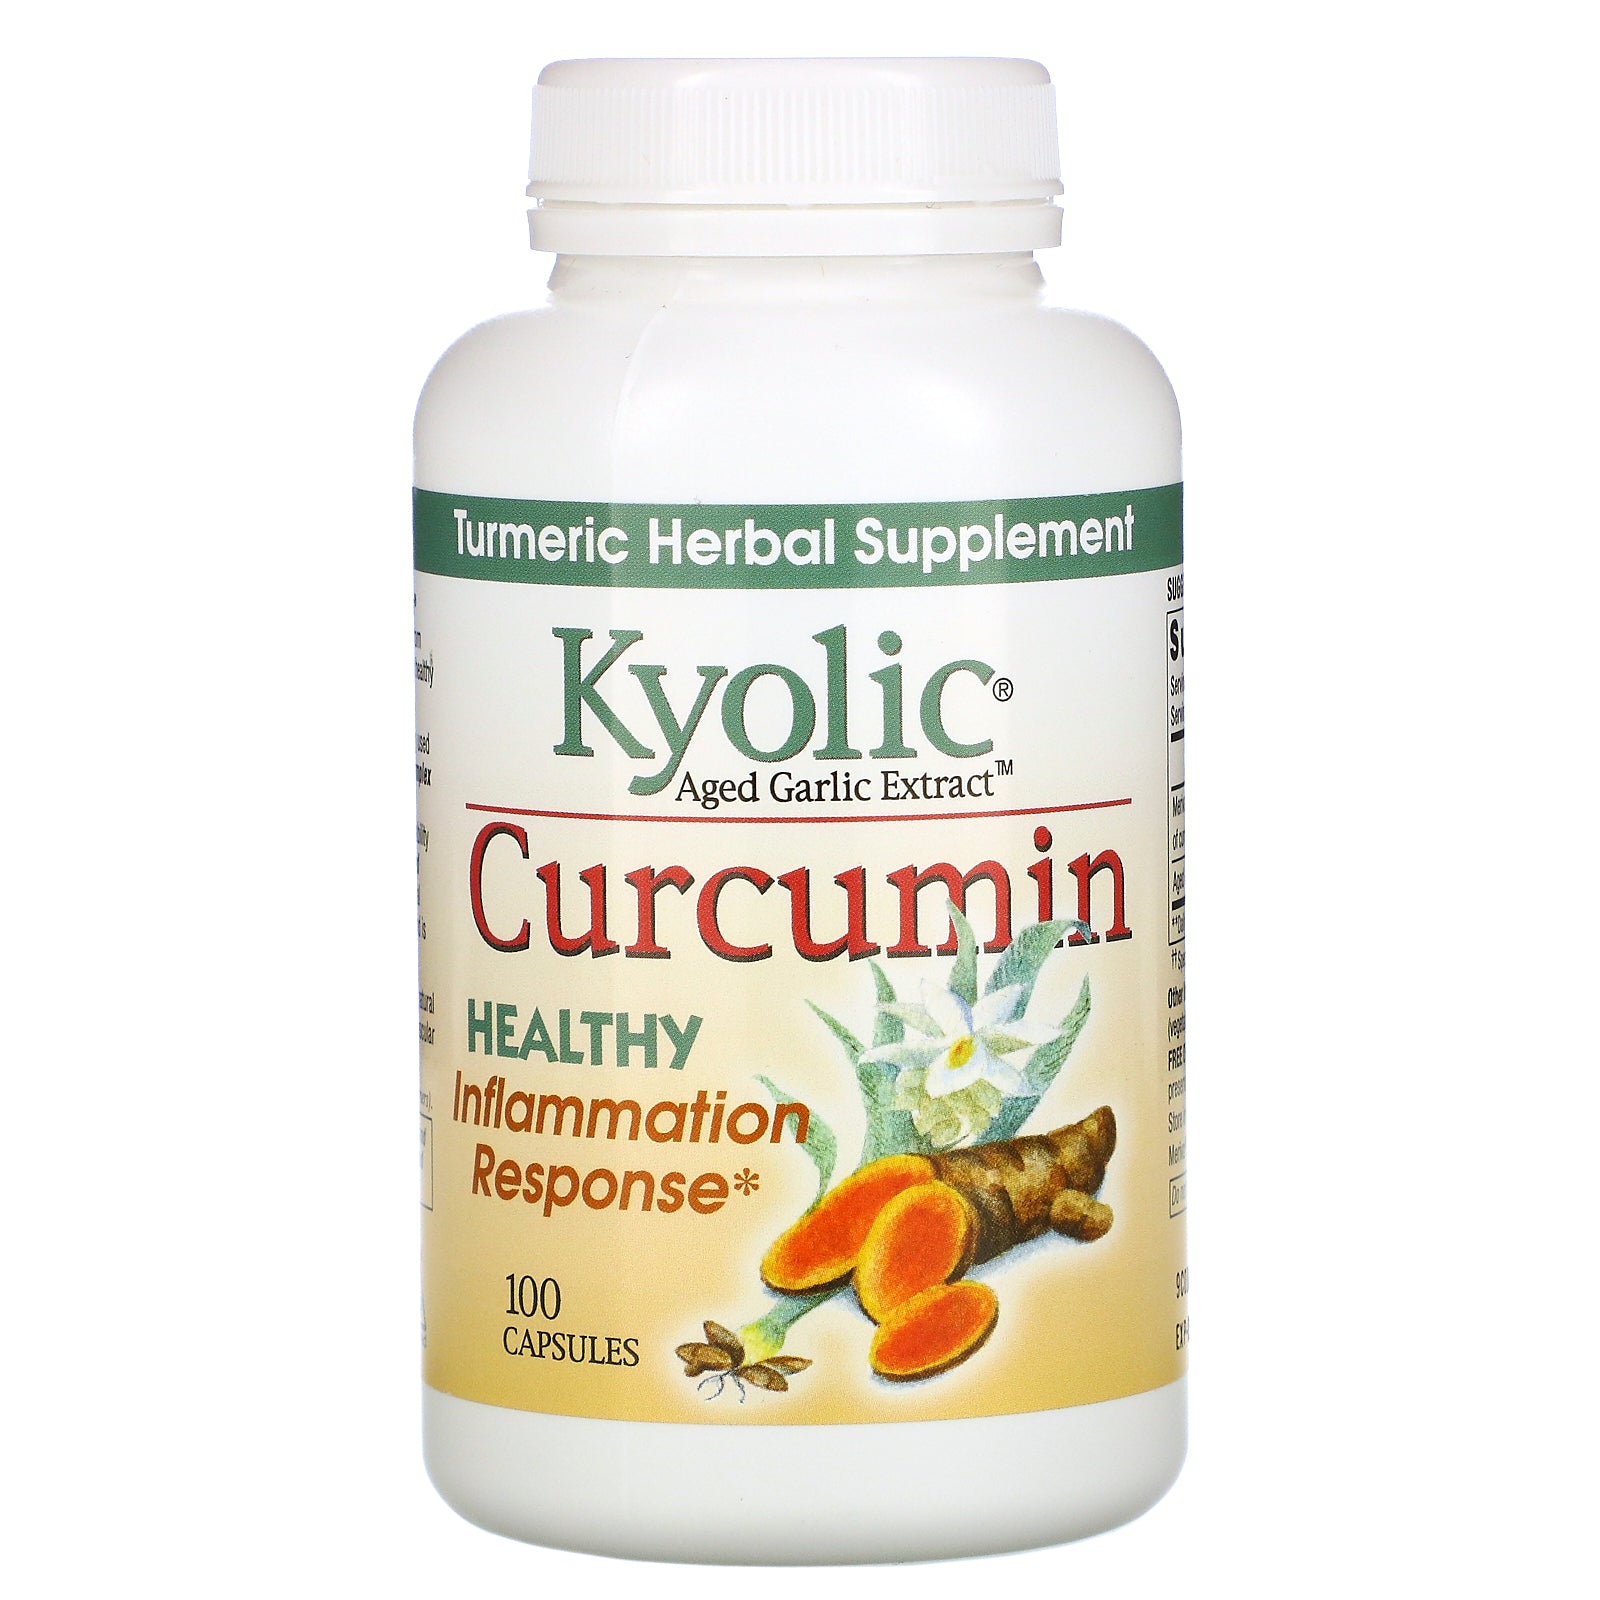 Kyolic, Aged Garlic Extract, Inflammation Response, Curcumin, 100 Capsules